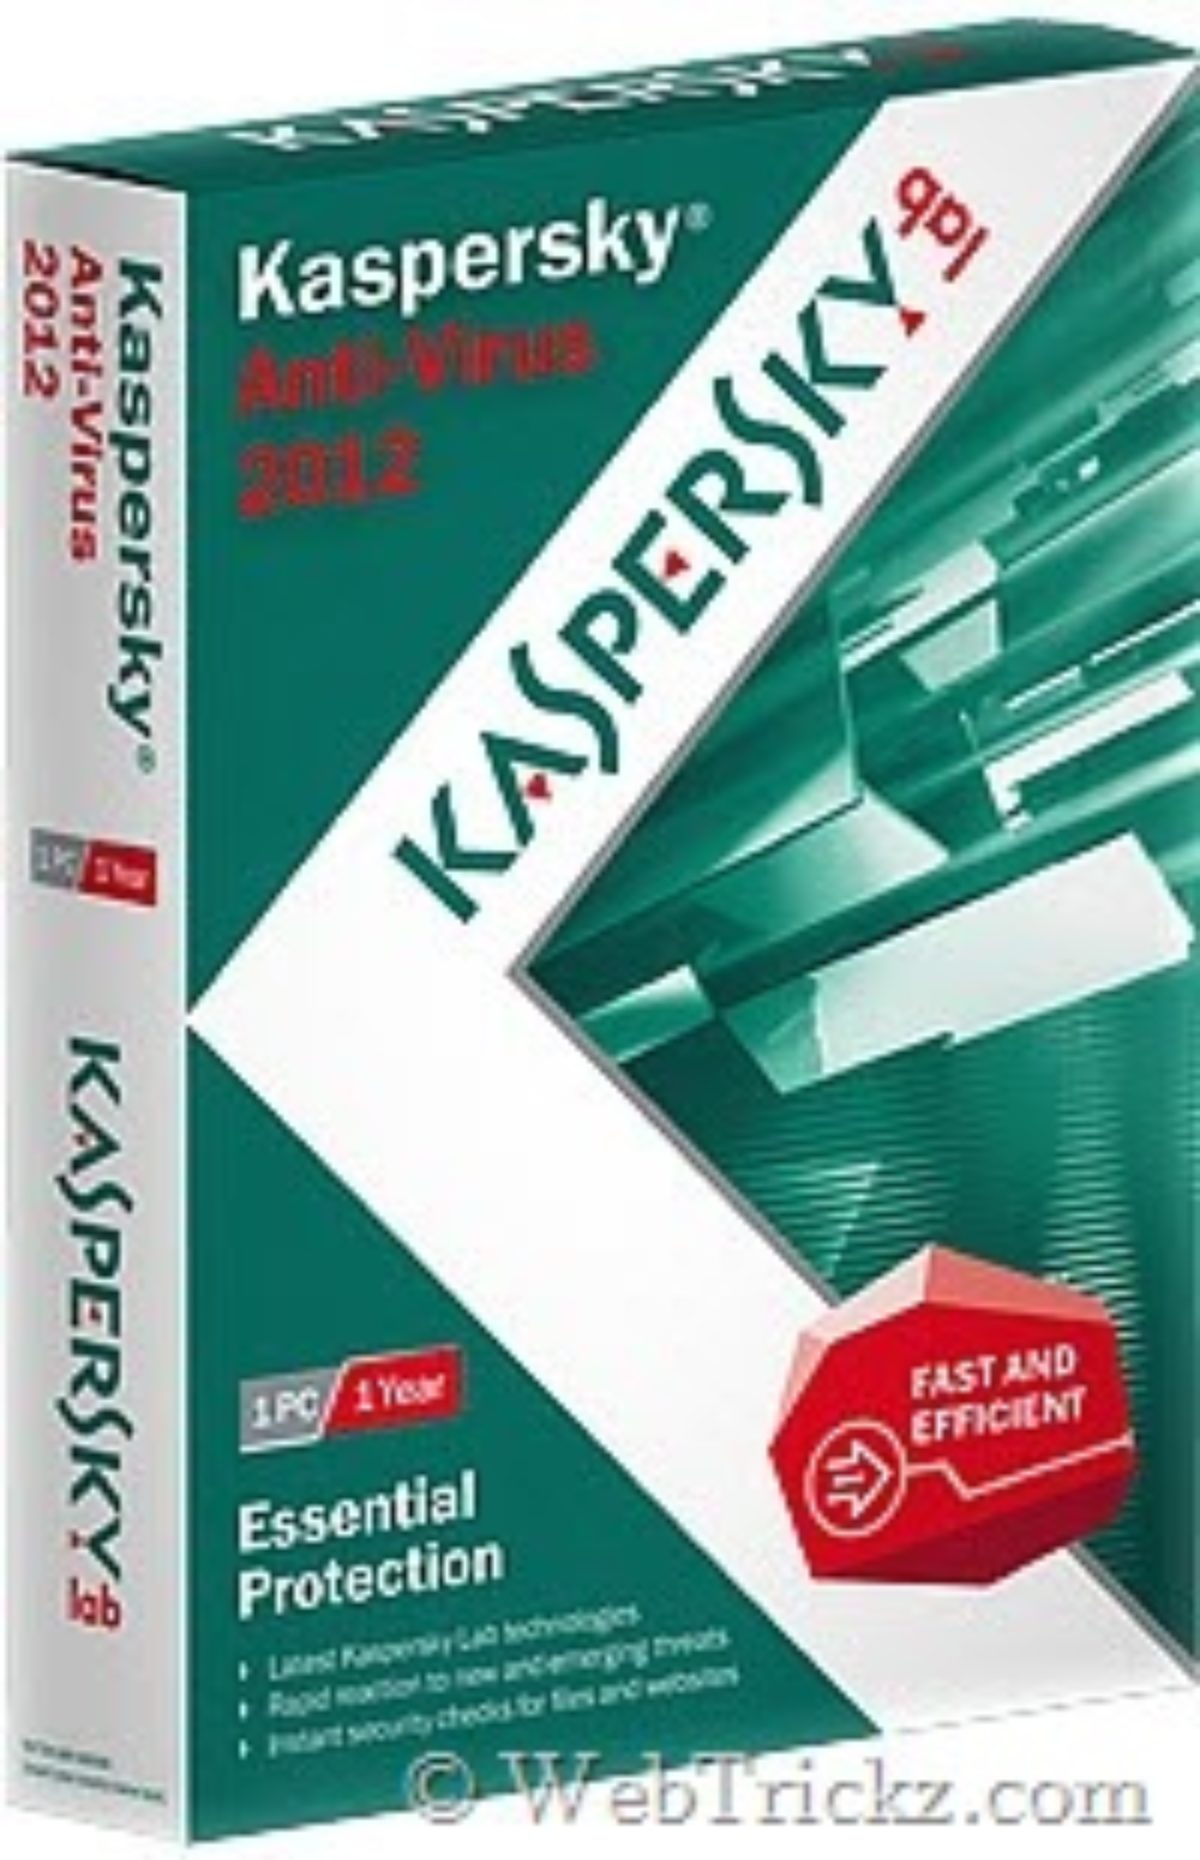 kaspersky antivirus download gratuiti 2012